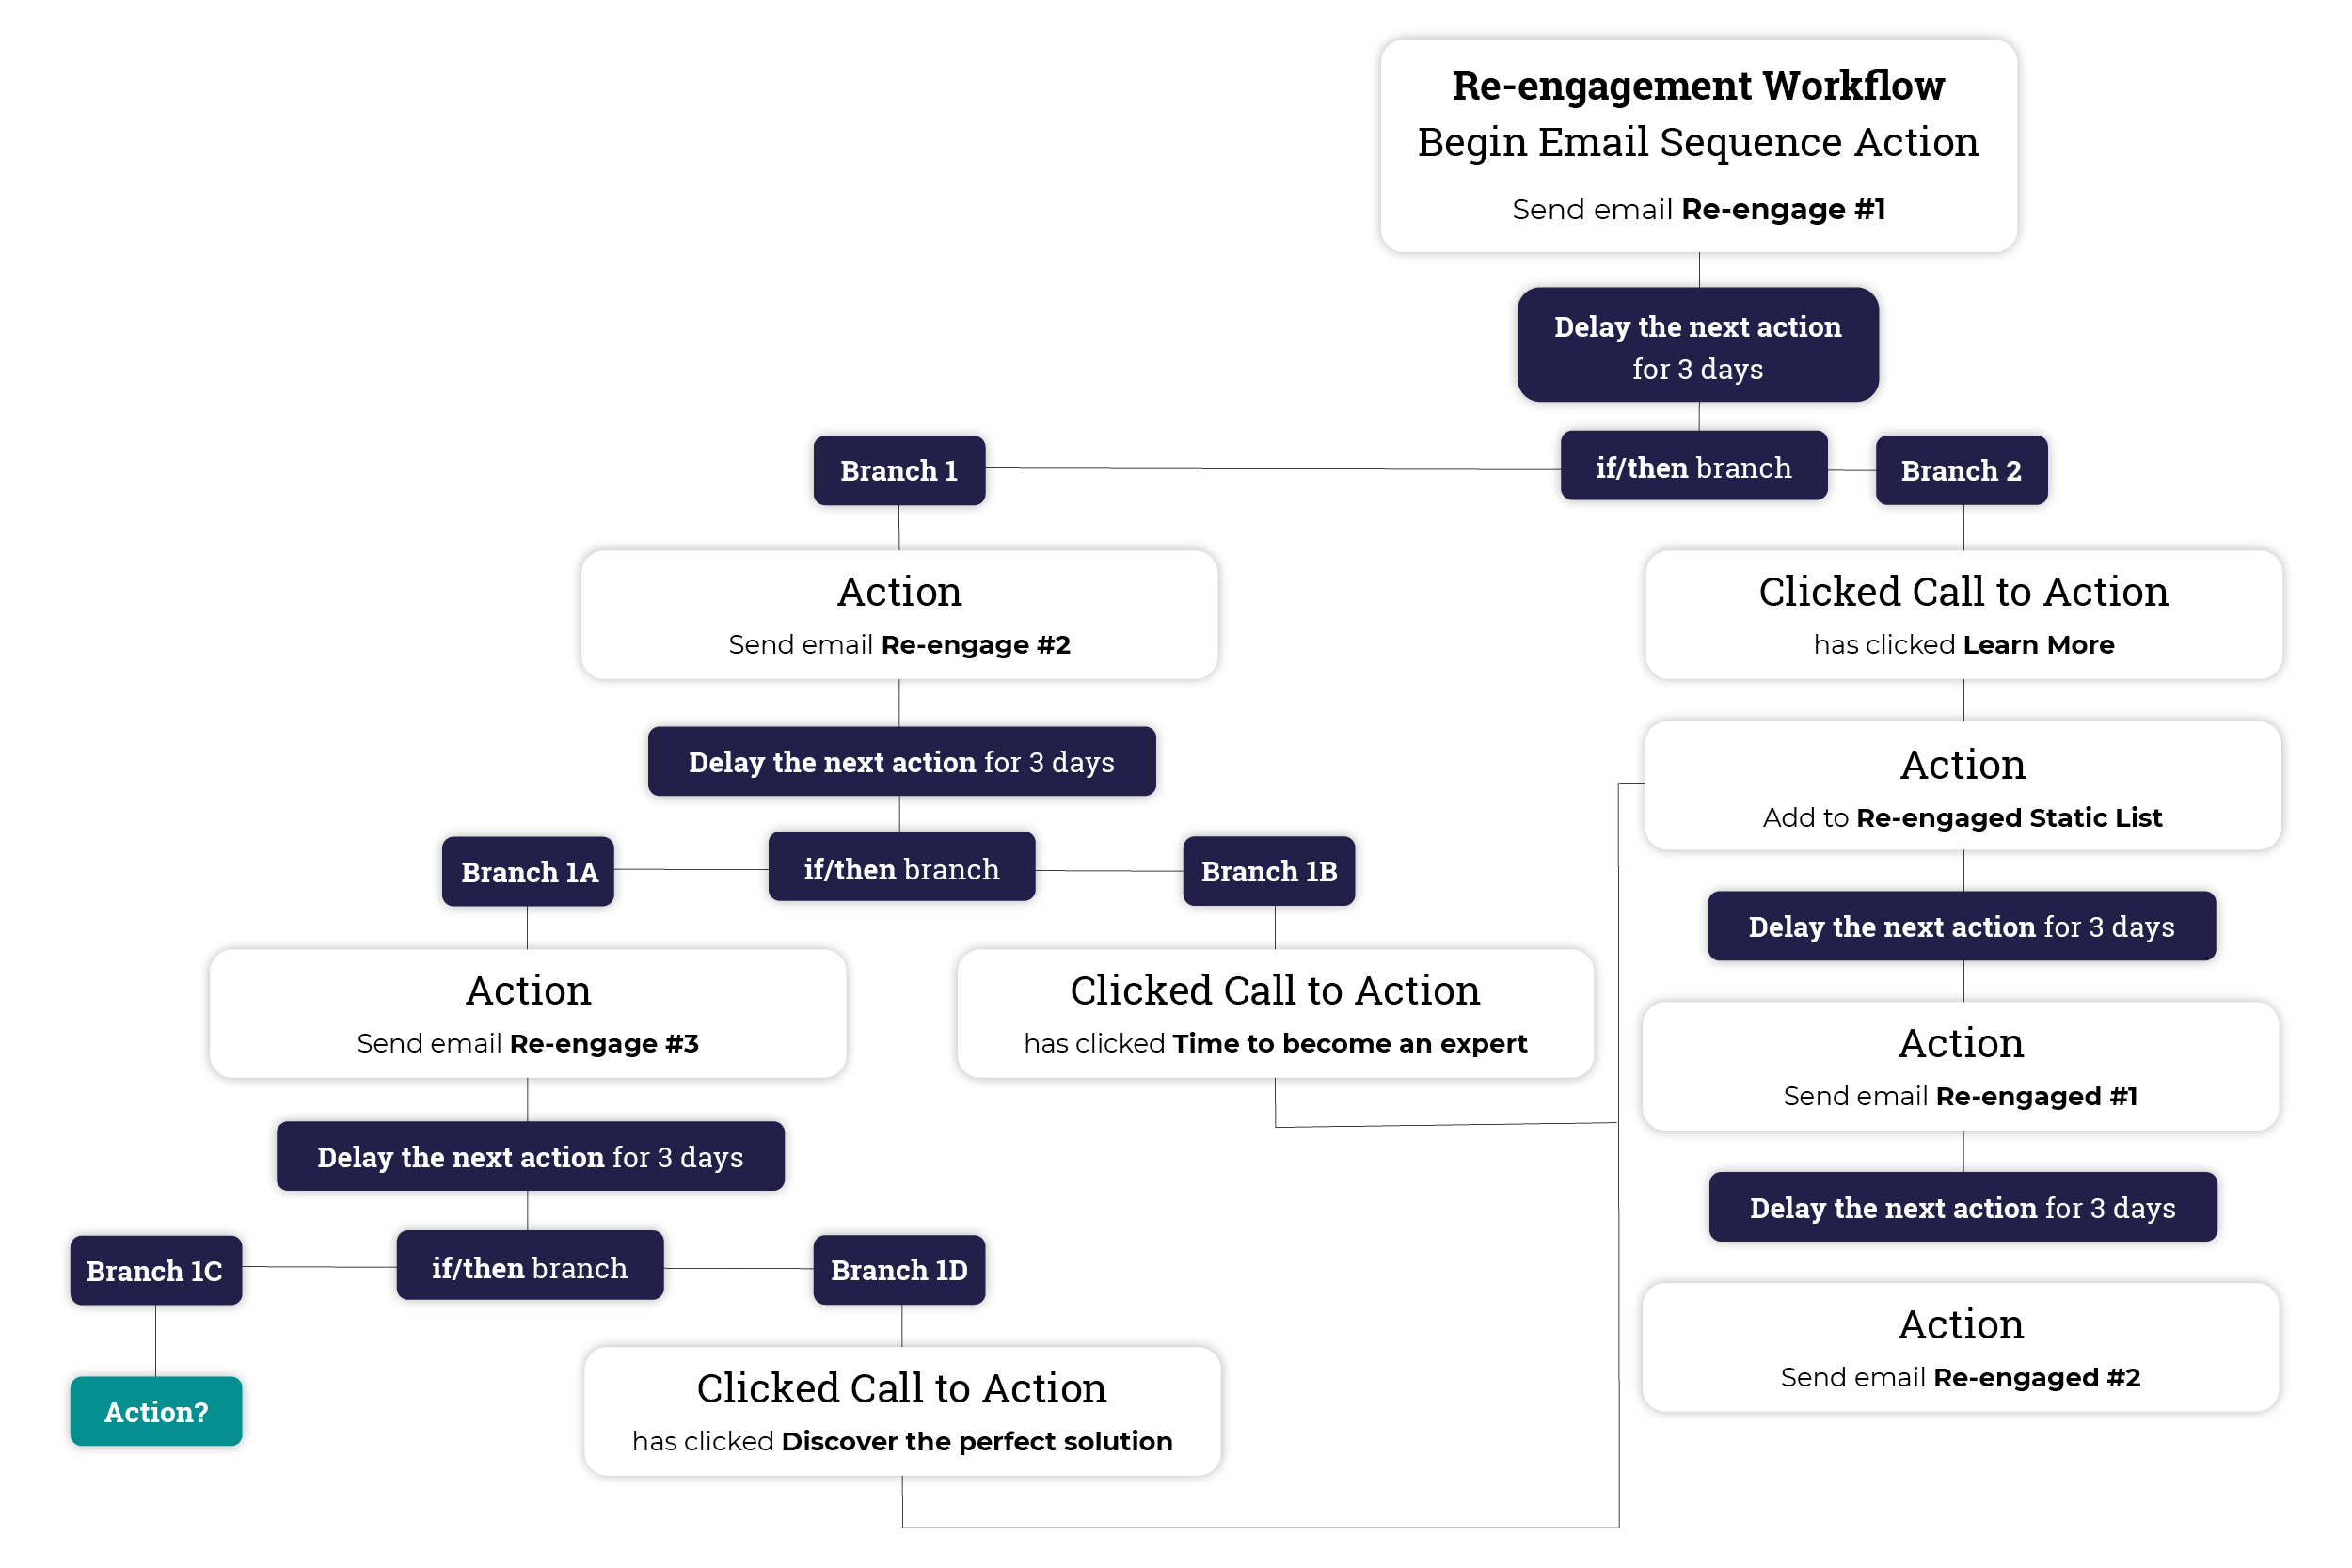 HubSpot Workflow 2: Cold Lead Re-engagement Flow Diagram